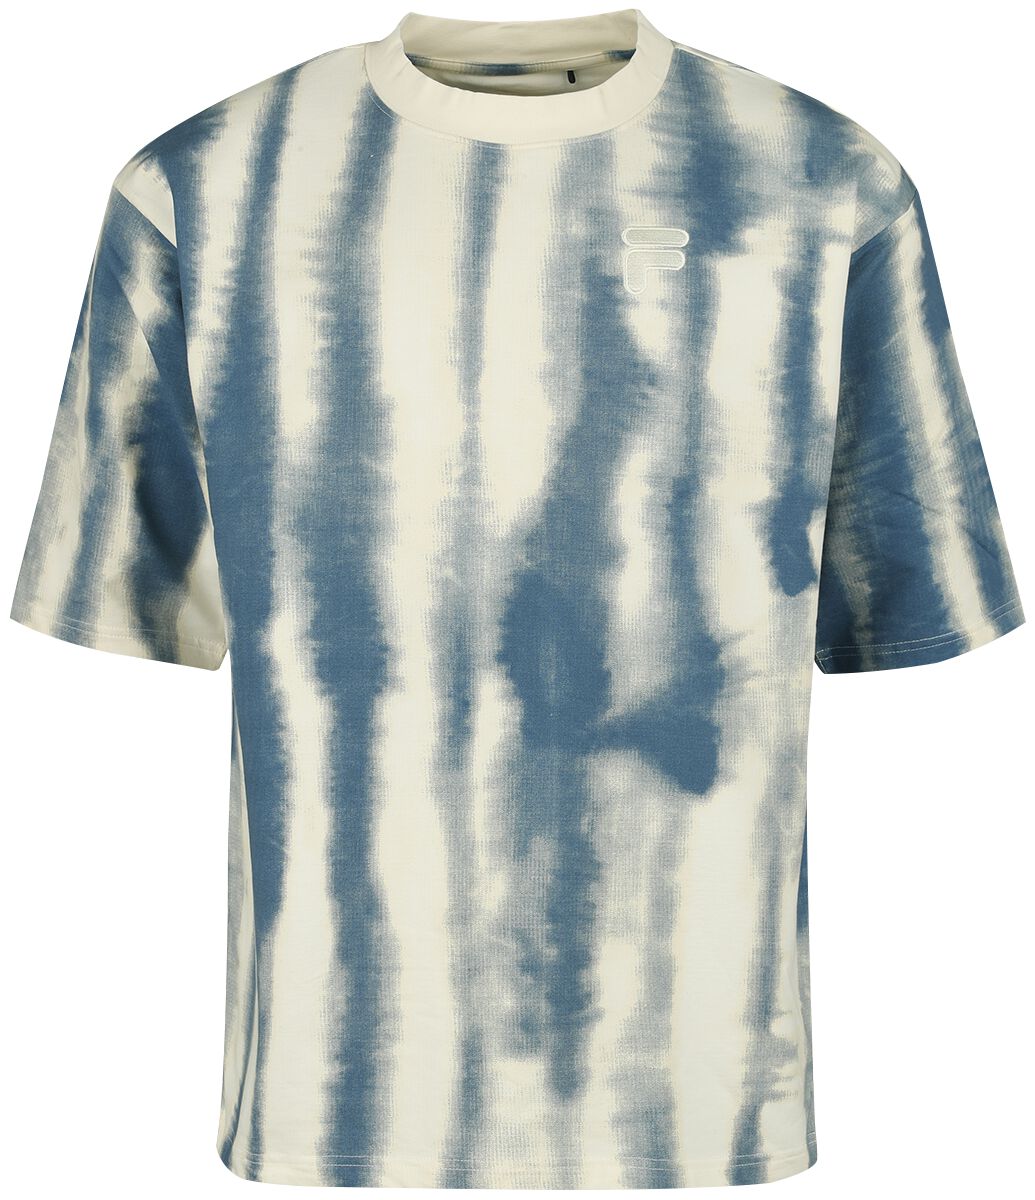 Fila CAPOLIVERI AOP oversized tee T-Shirt weiß blau in M